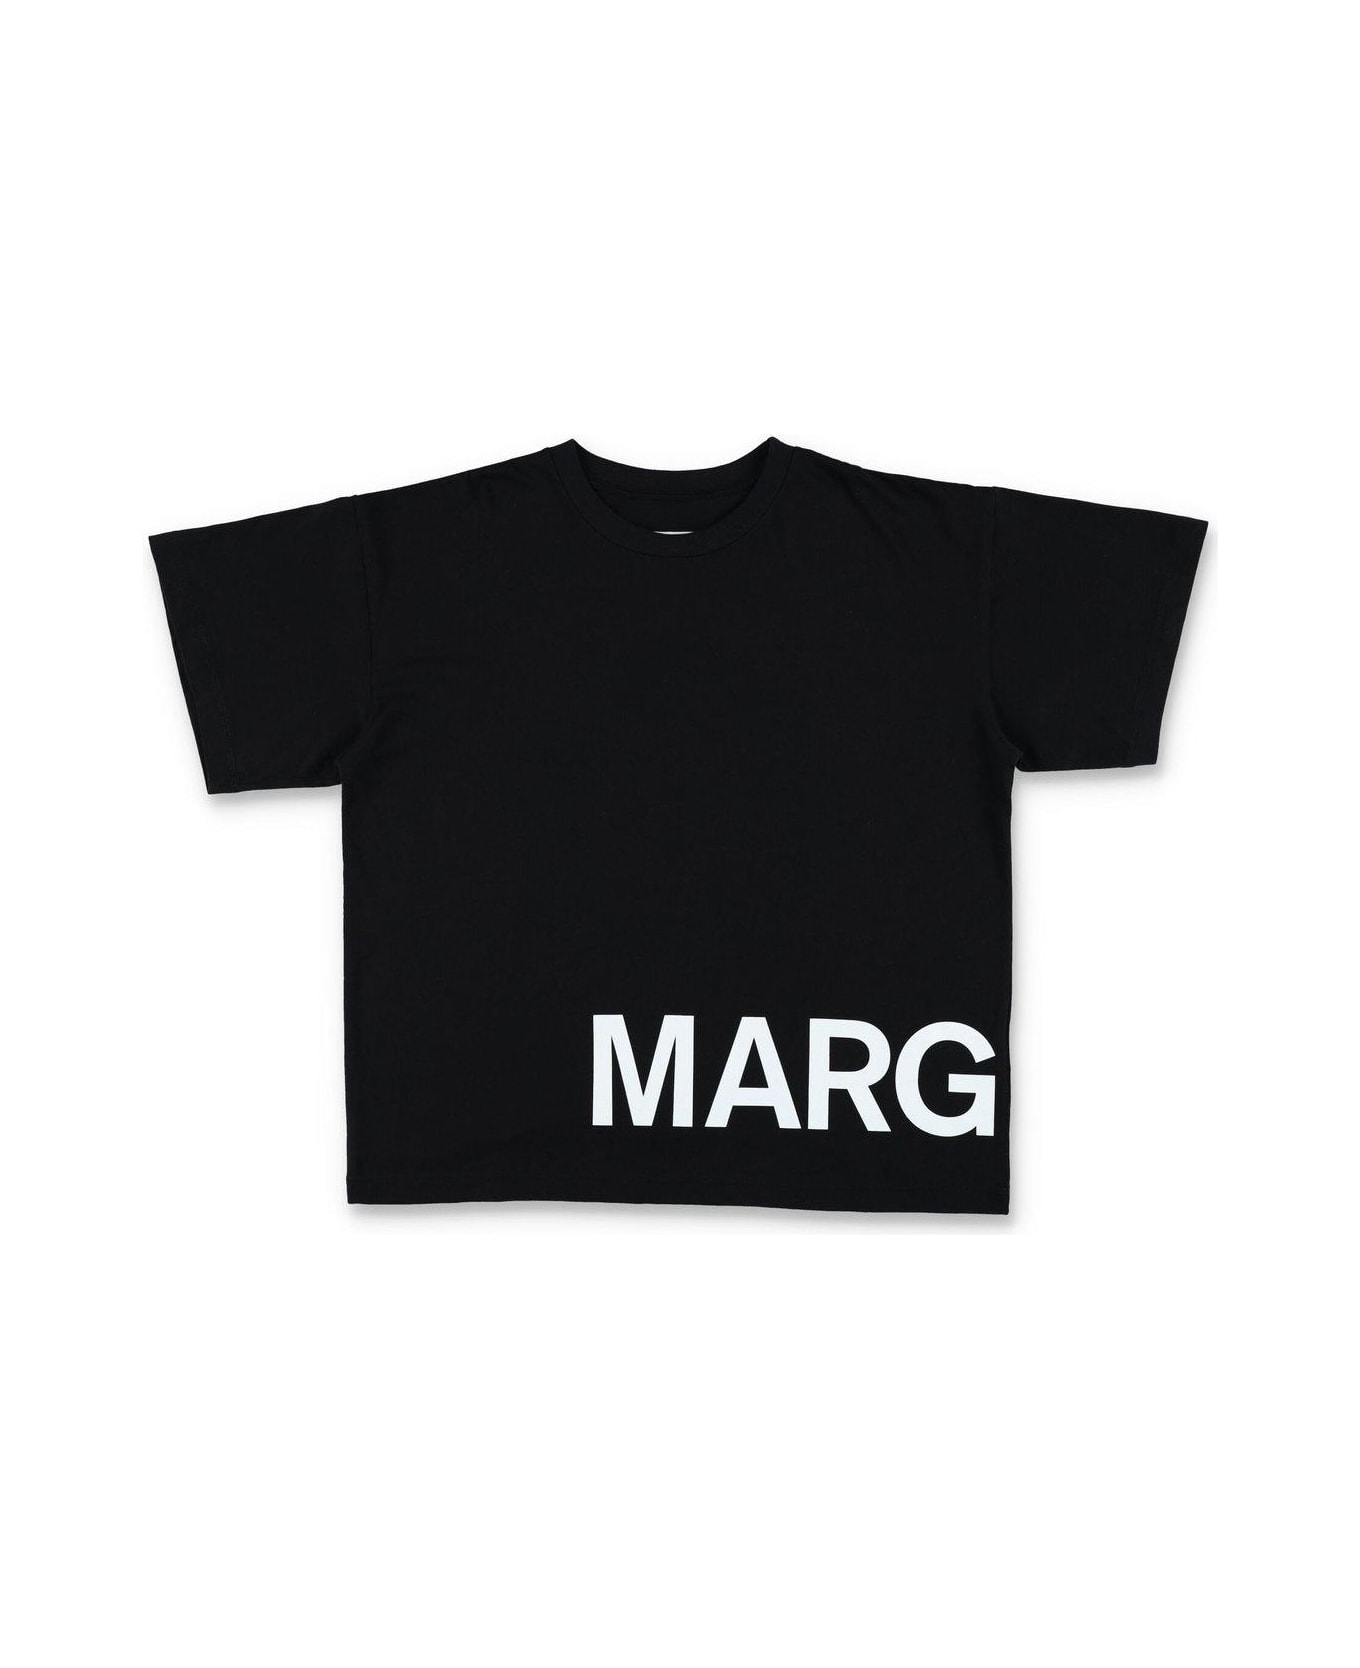 MM6 Maison Margiela Logo Printed Crewneck T-shirt